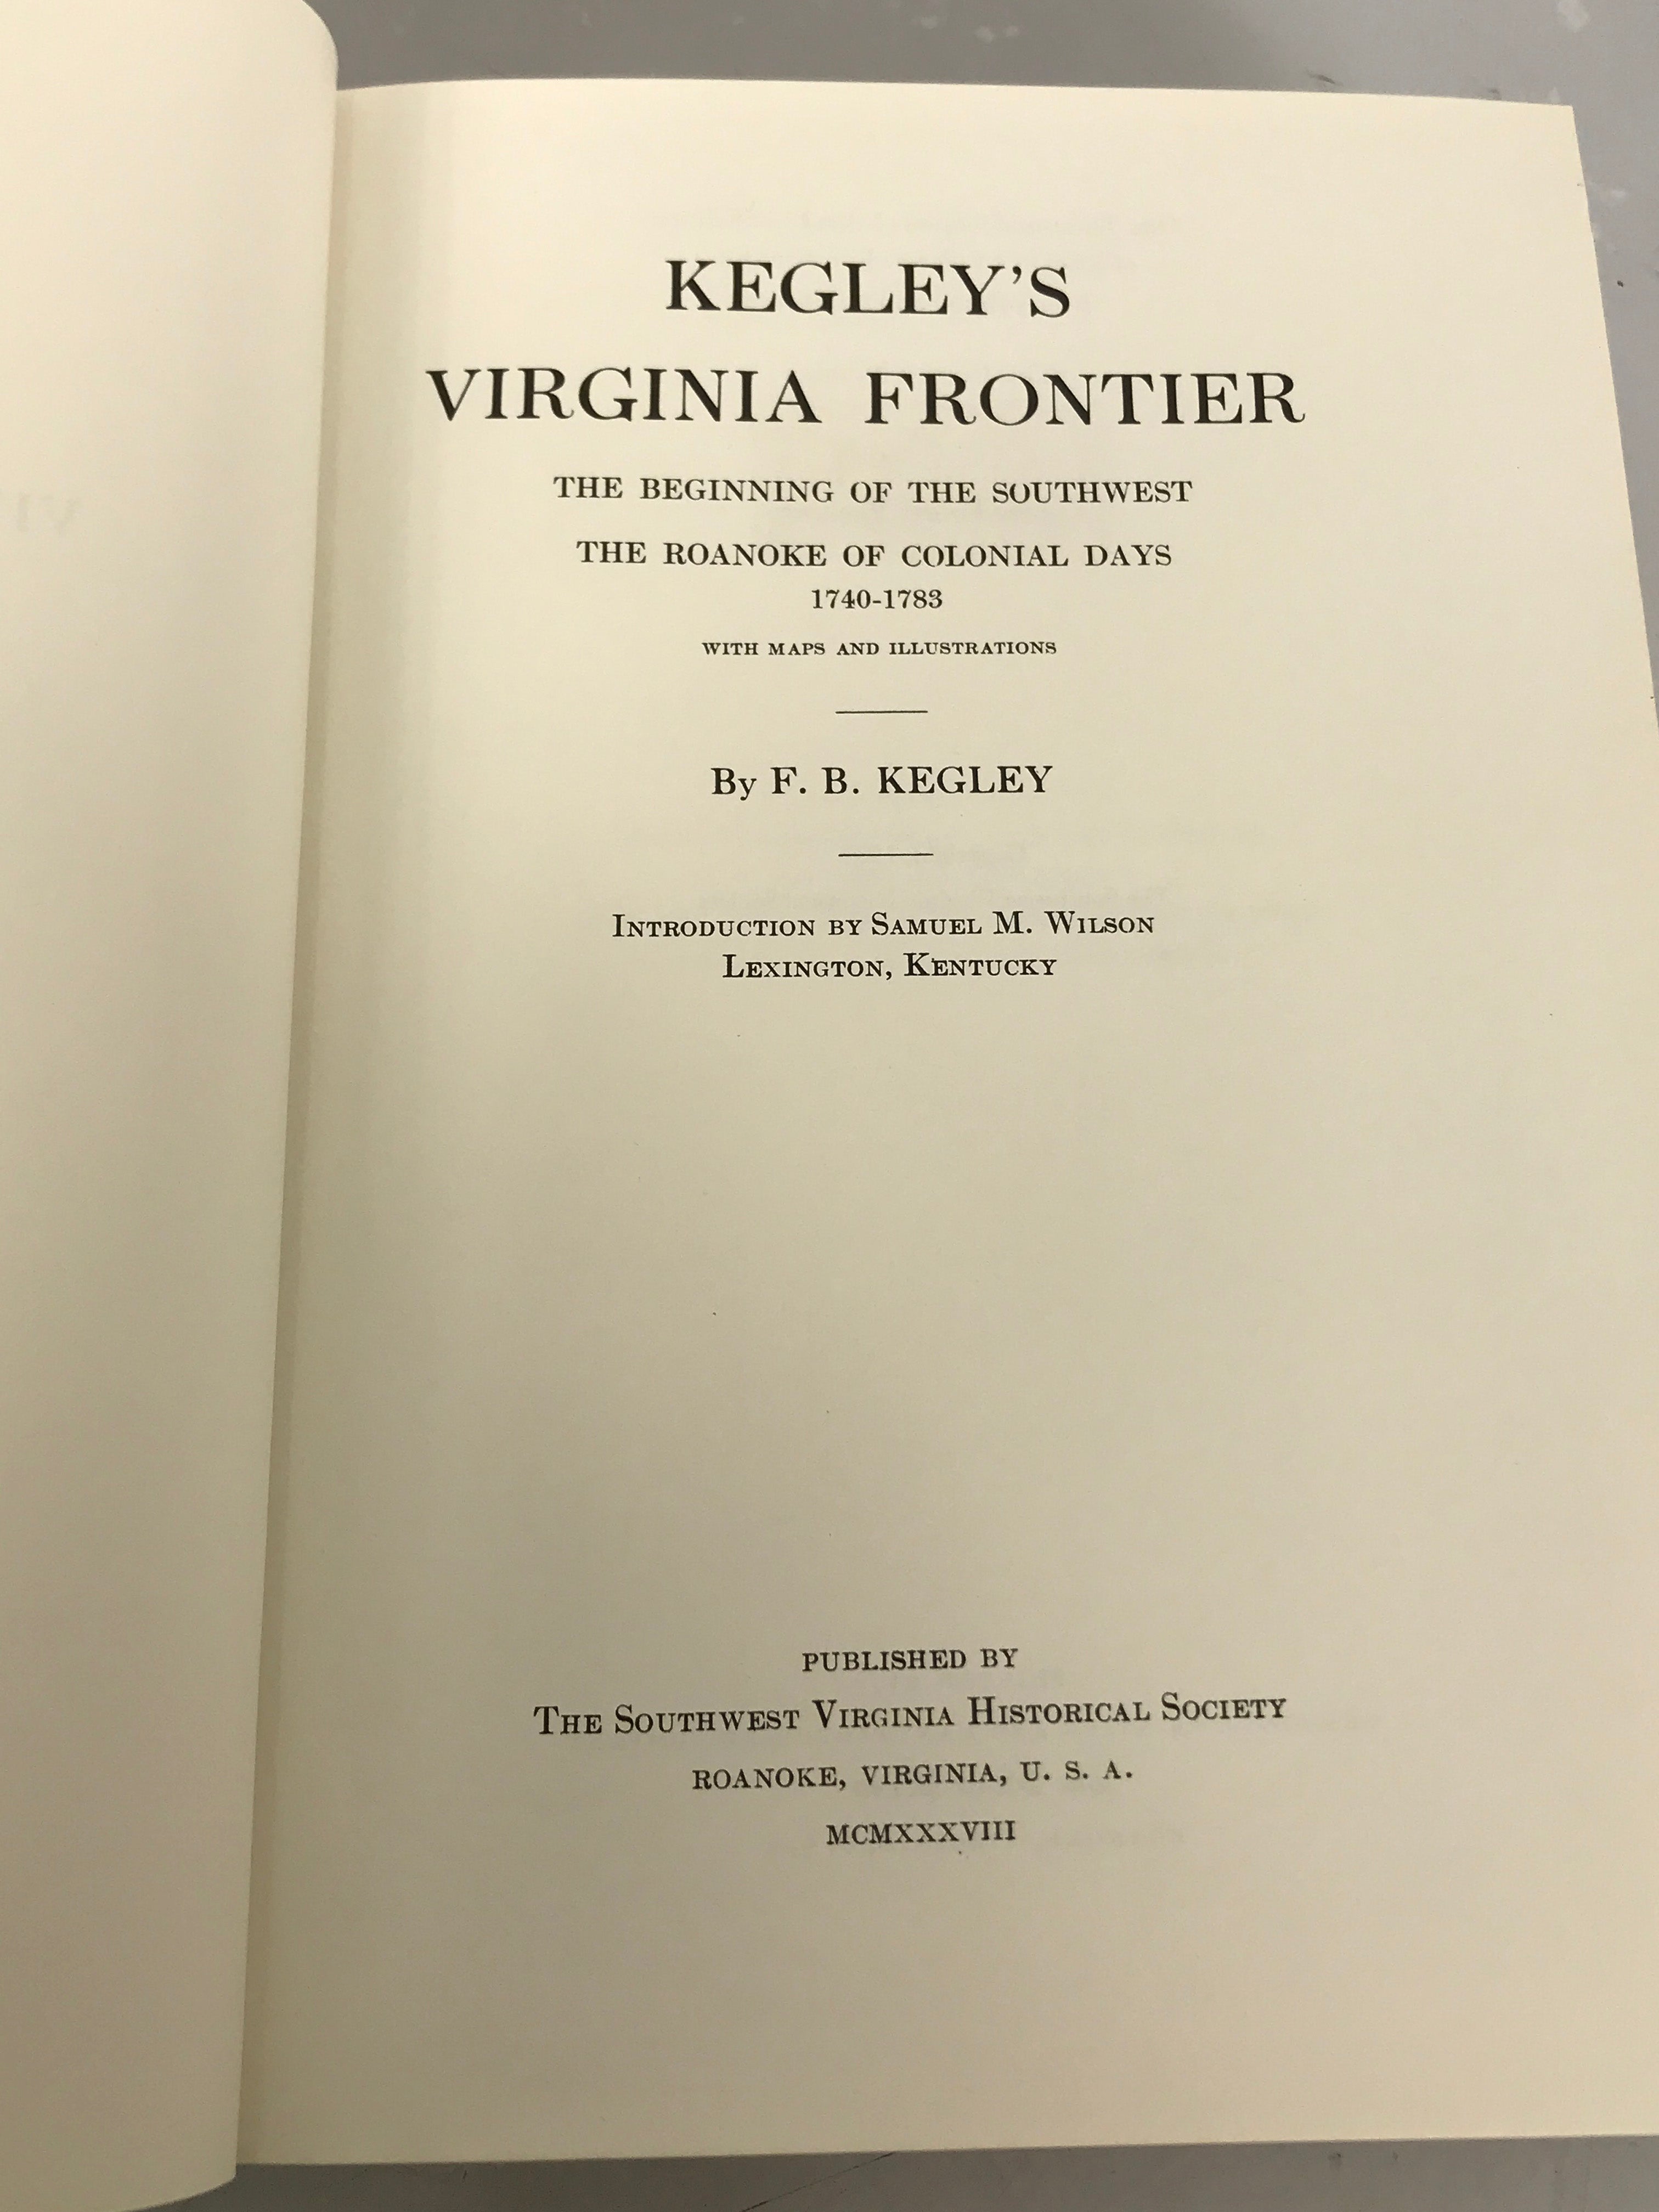 Kegley's Virginia Frontier by F.B. Kegley HC 1938 Fifth Printing